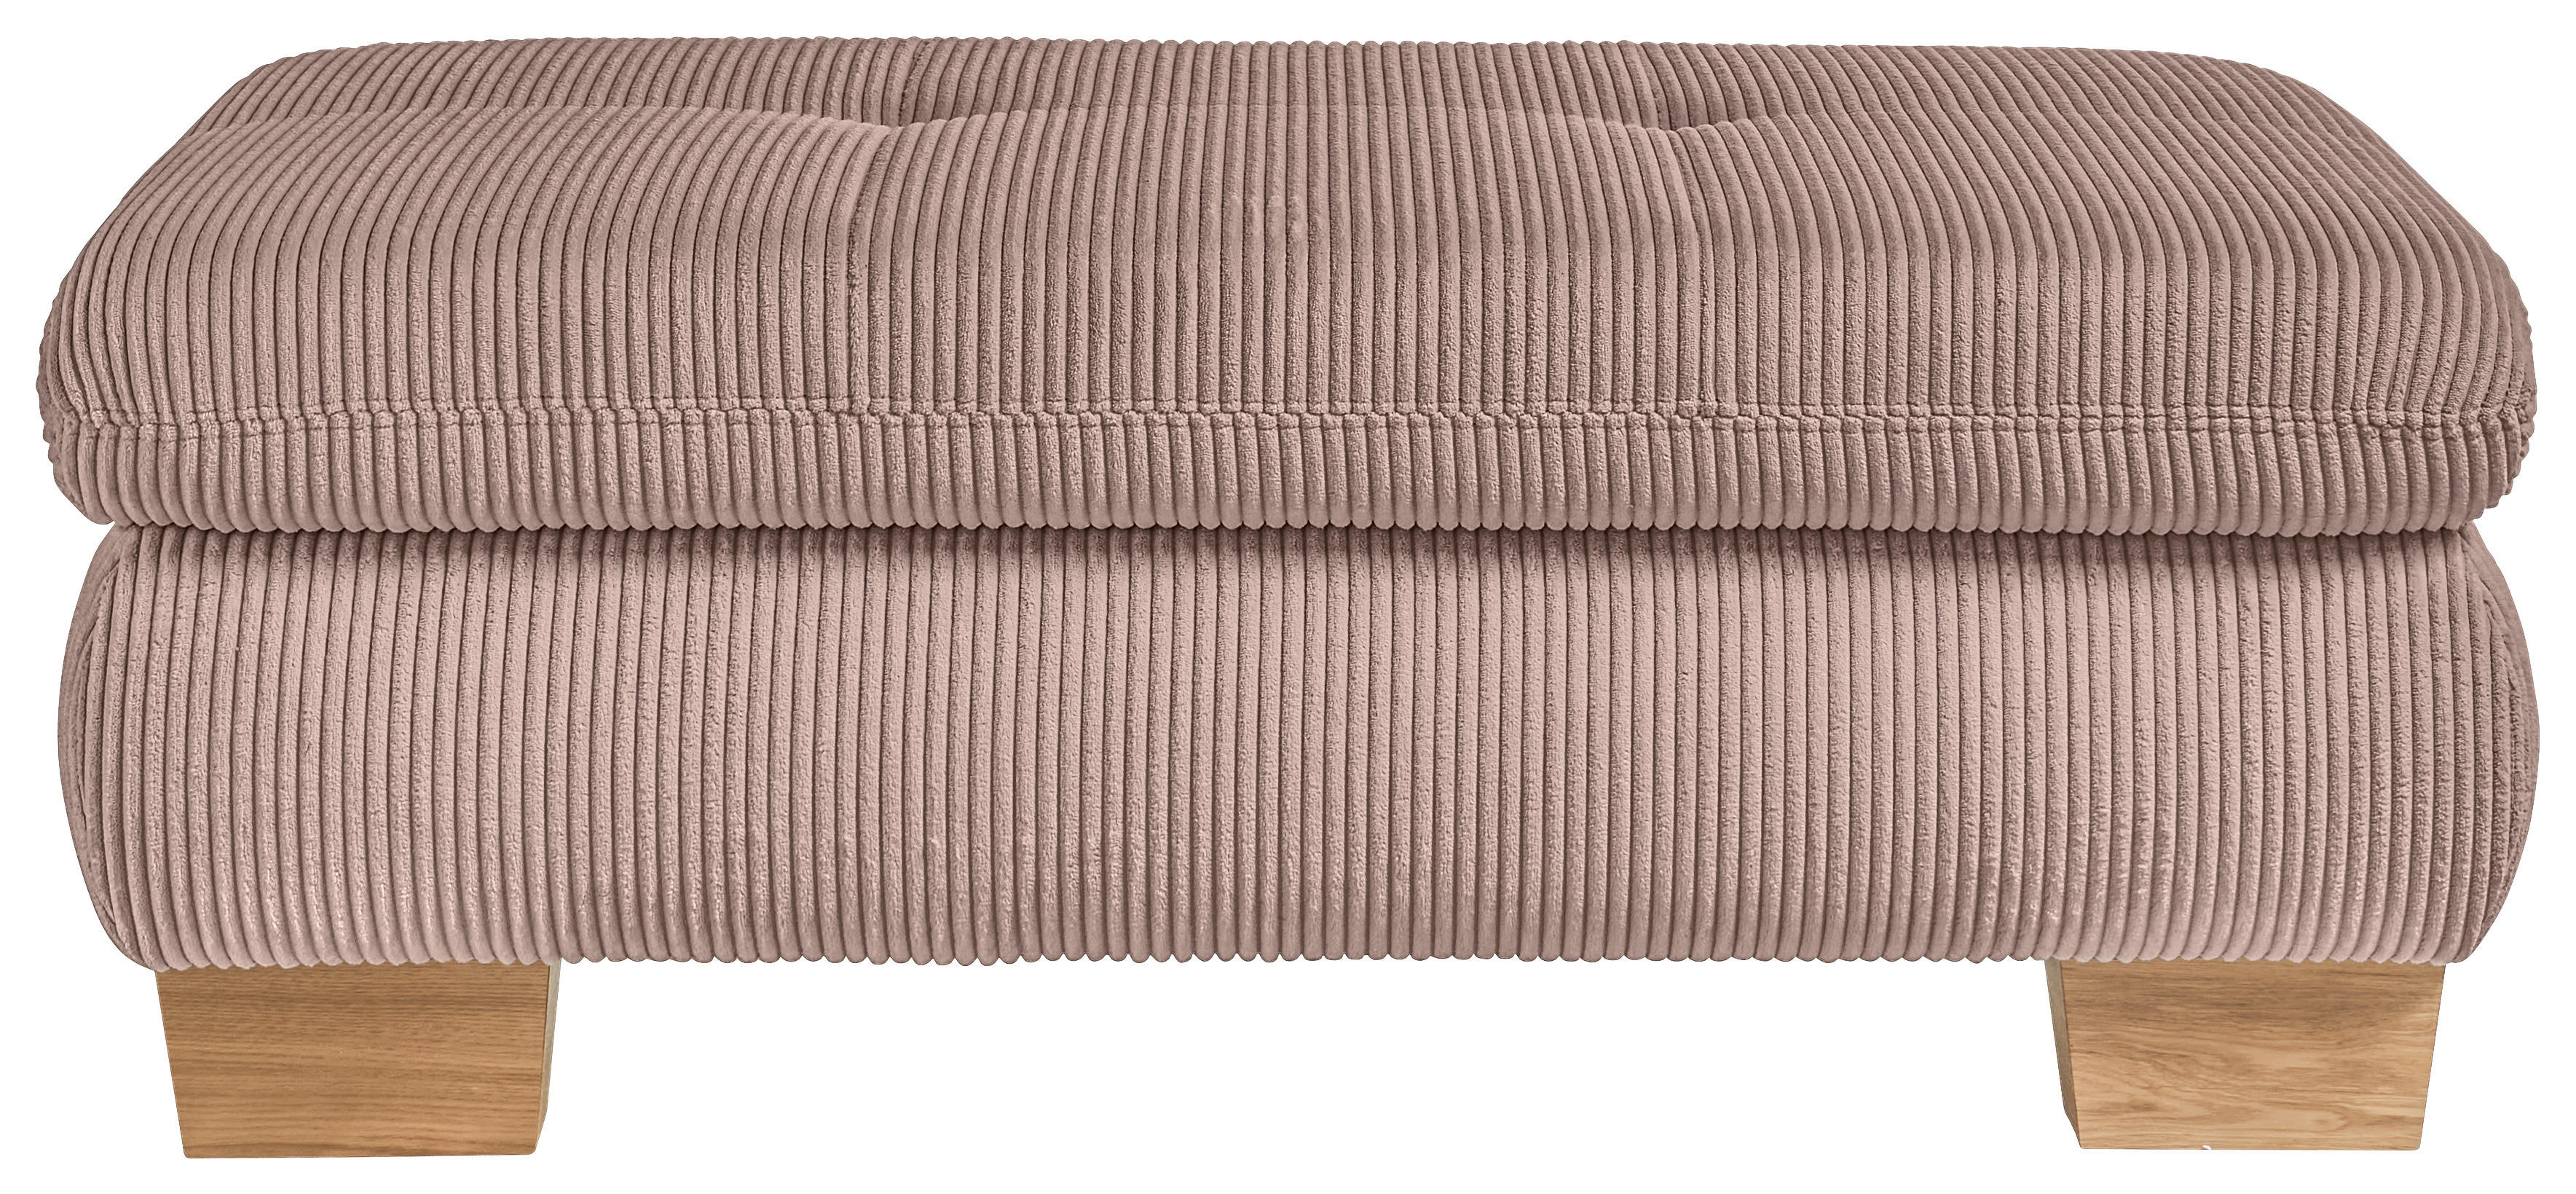 HOCKER Kord Rosa  - Eiche Bianco/Rosa, KONVENTIONELL, Holz/Textil (129/49/64cm) - SetOne by Musterring